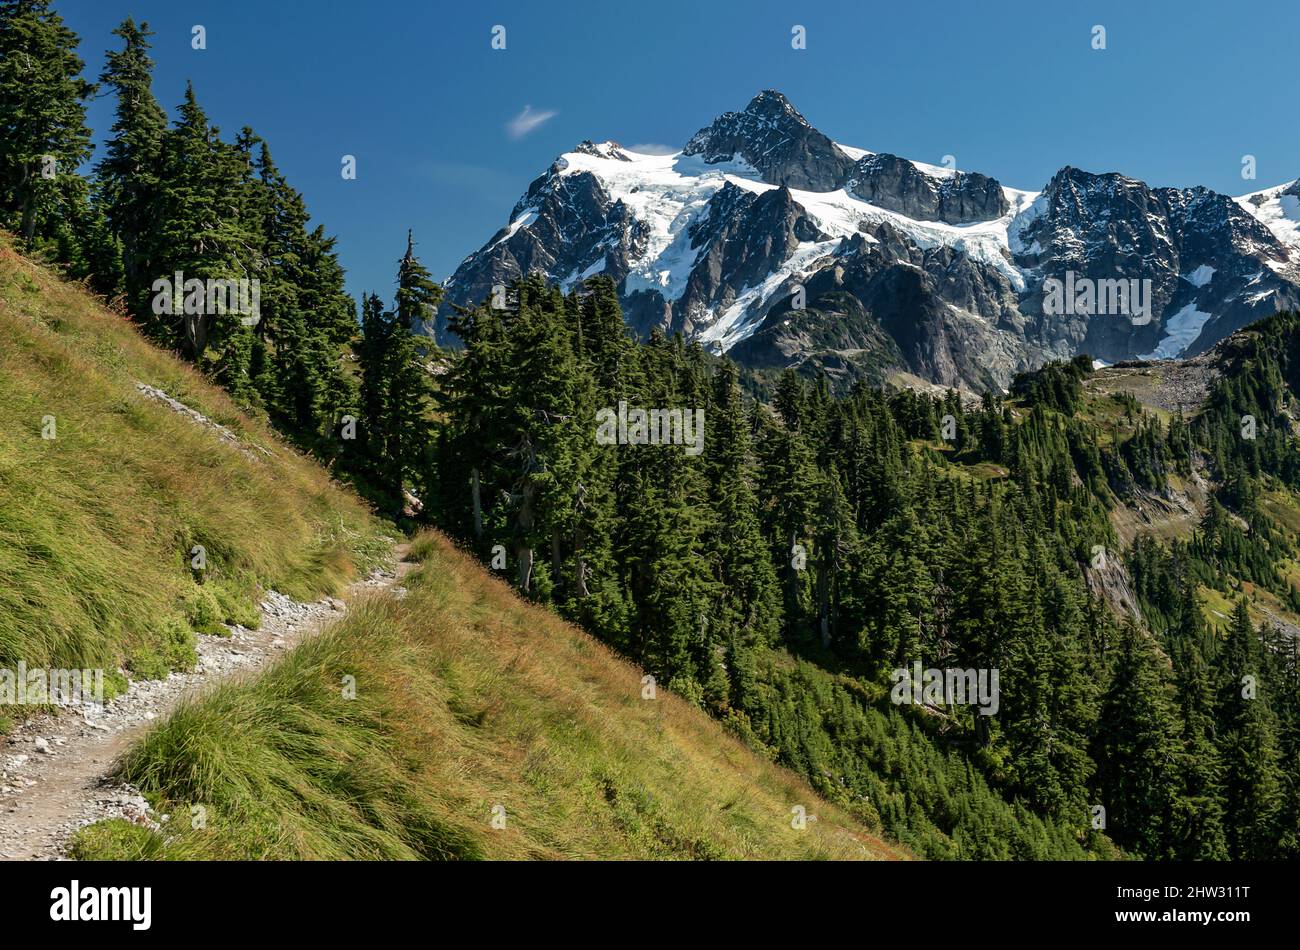 A glacier covered peak (Mt. Shuksan) rises above a hiking trail near Mt Baker, Washington. Stock Photo